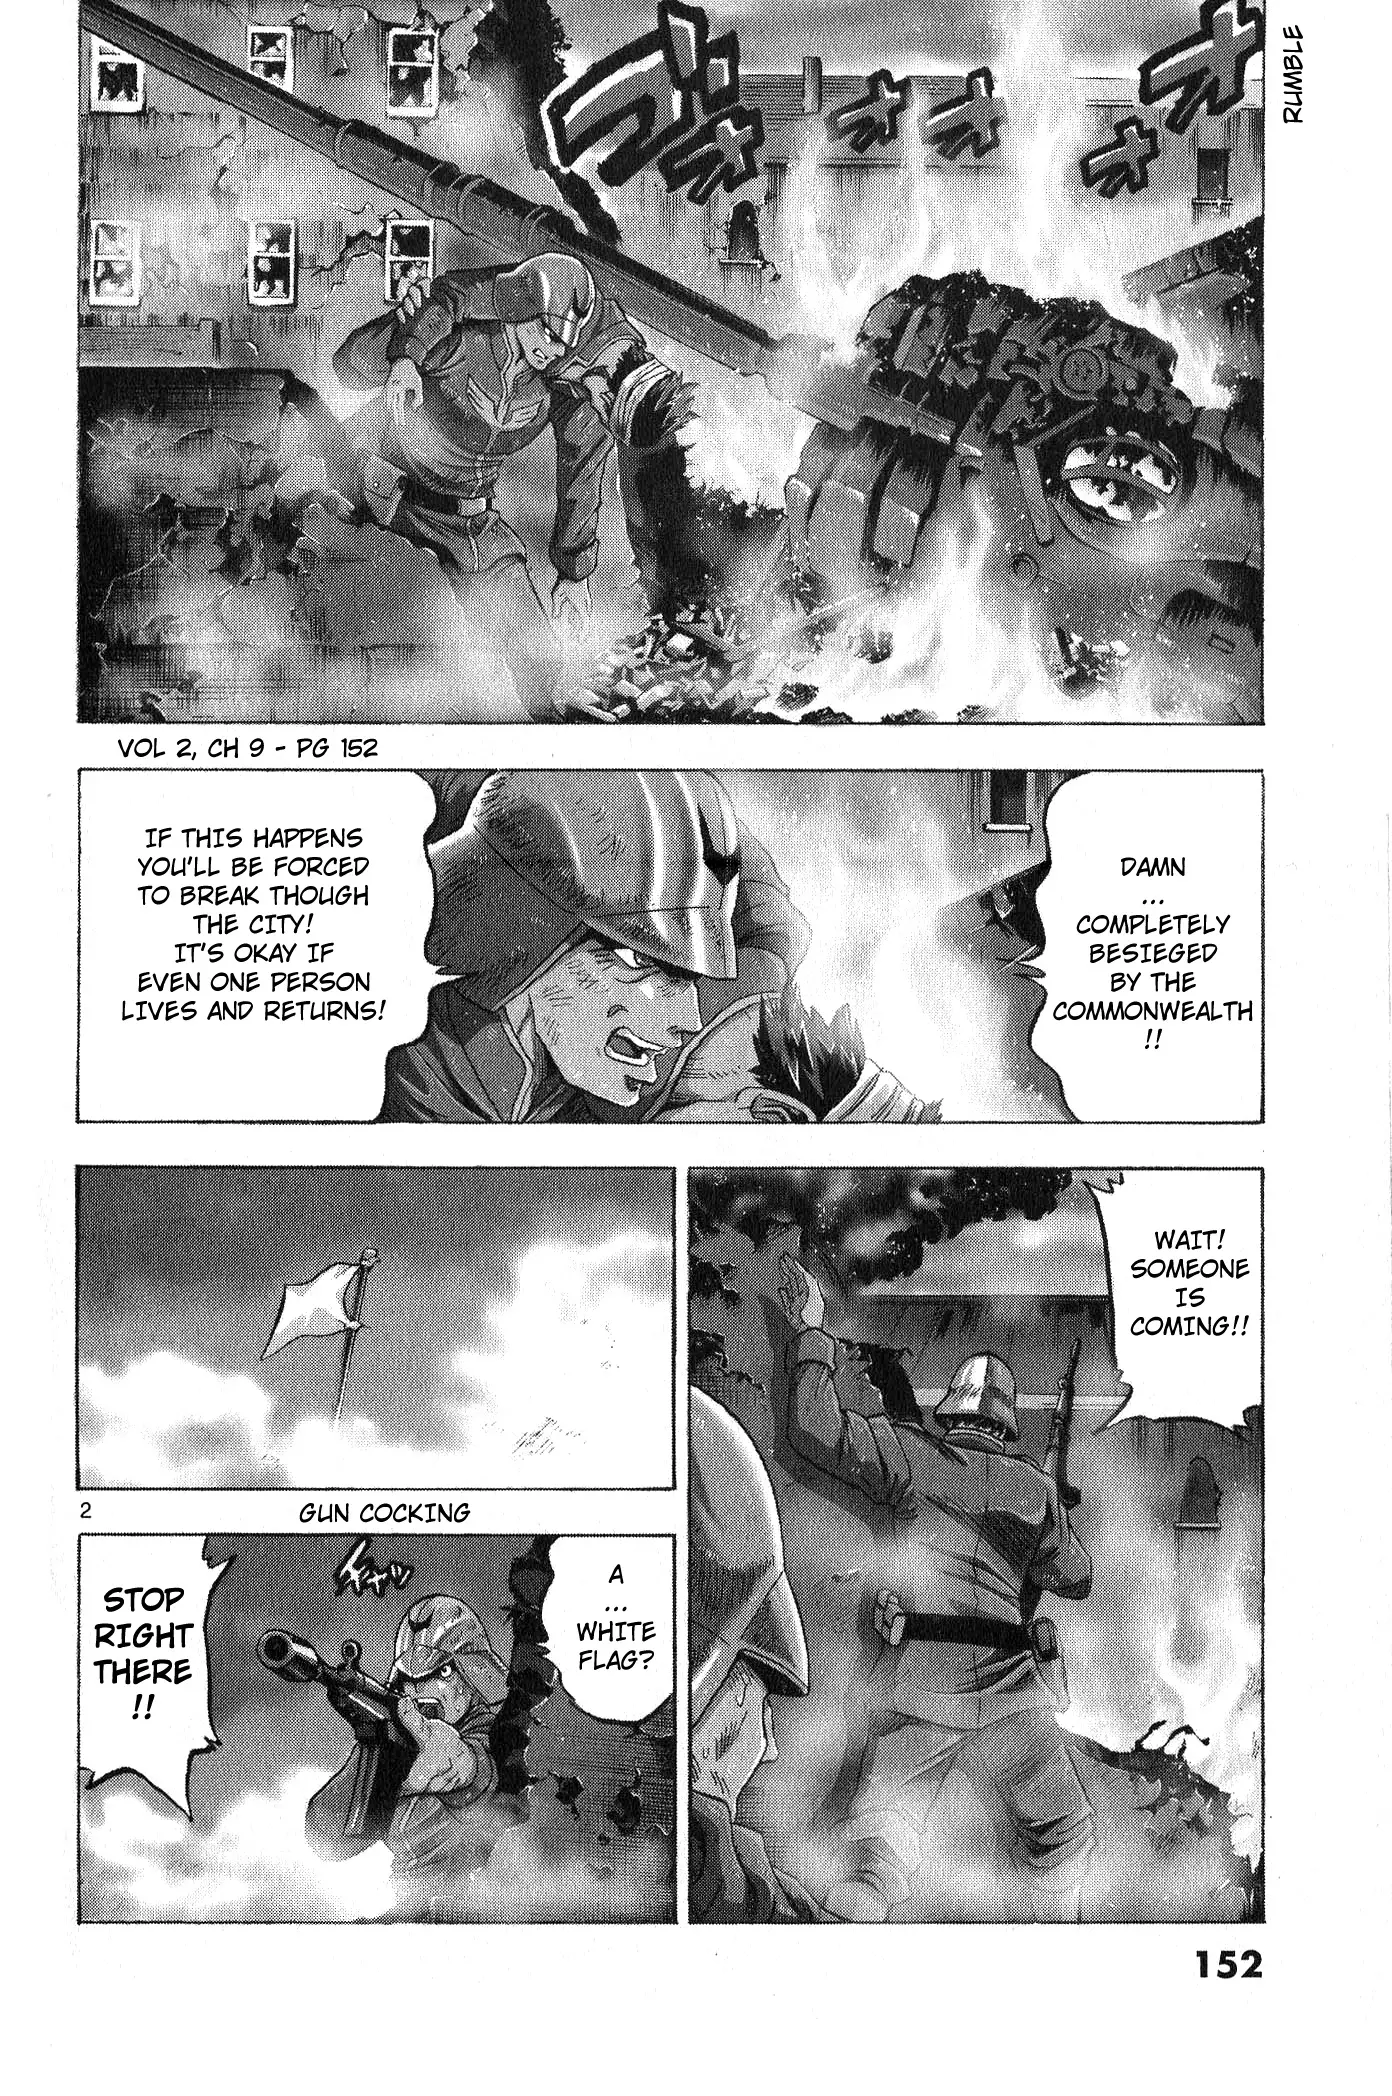 Mobile Suit Gundam Aggressor - 9 page 2-011859ed